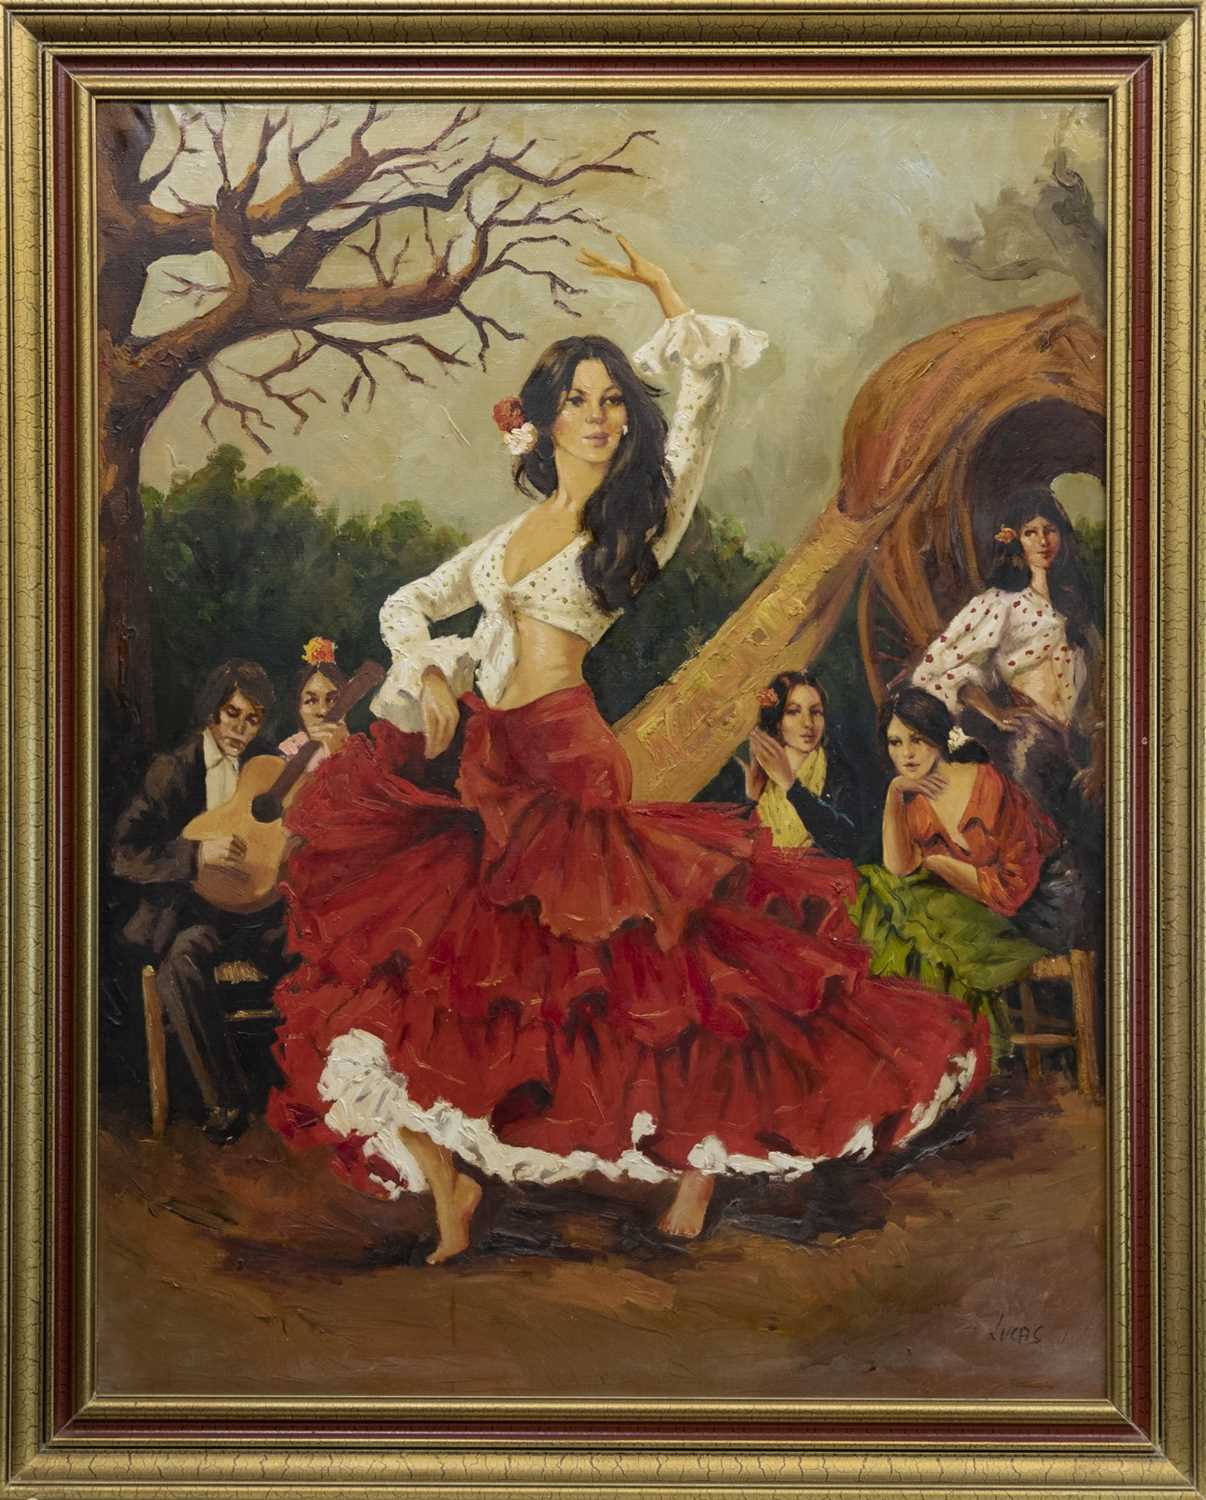 Lot 423 - YOUNG WOMAN DANCING, AN OIL